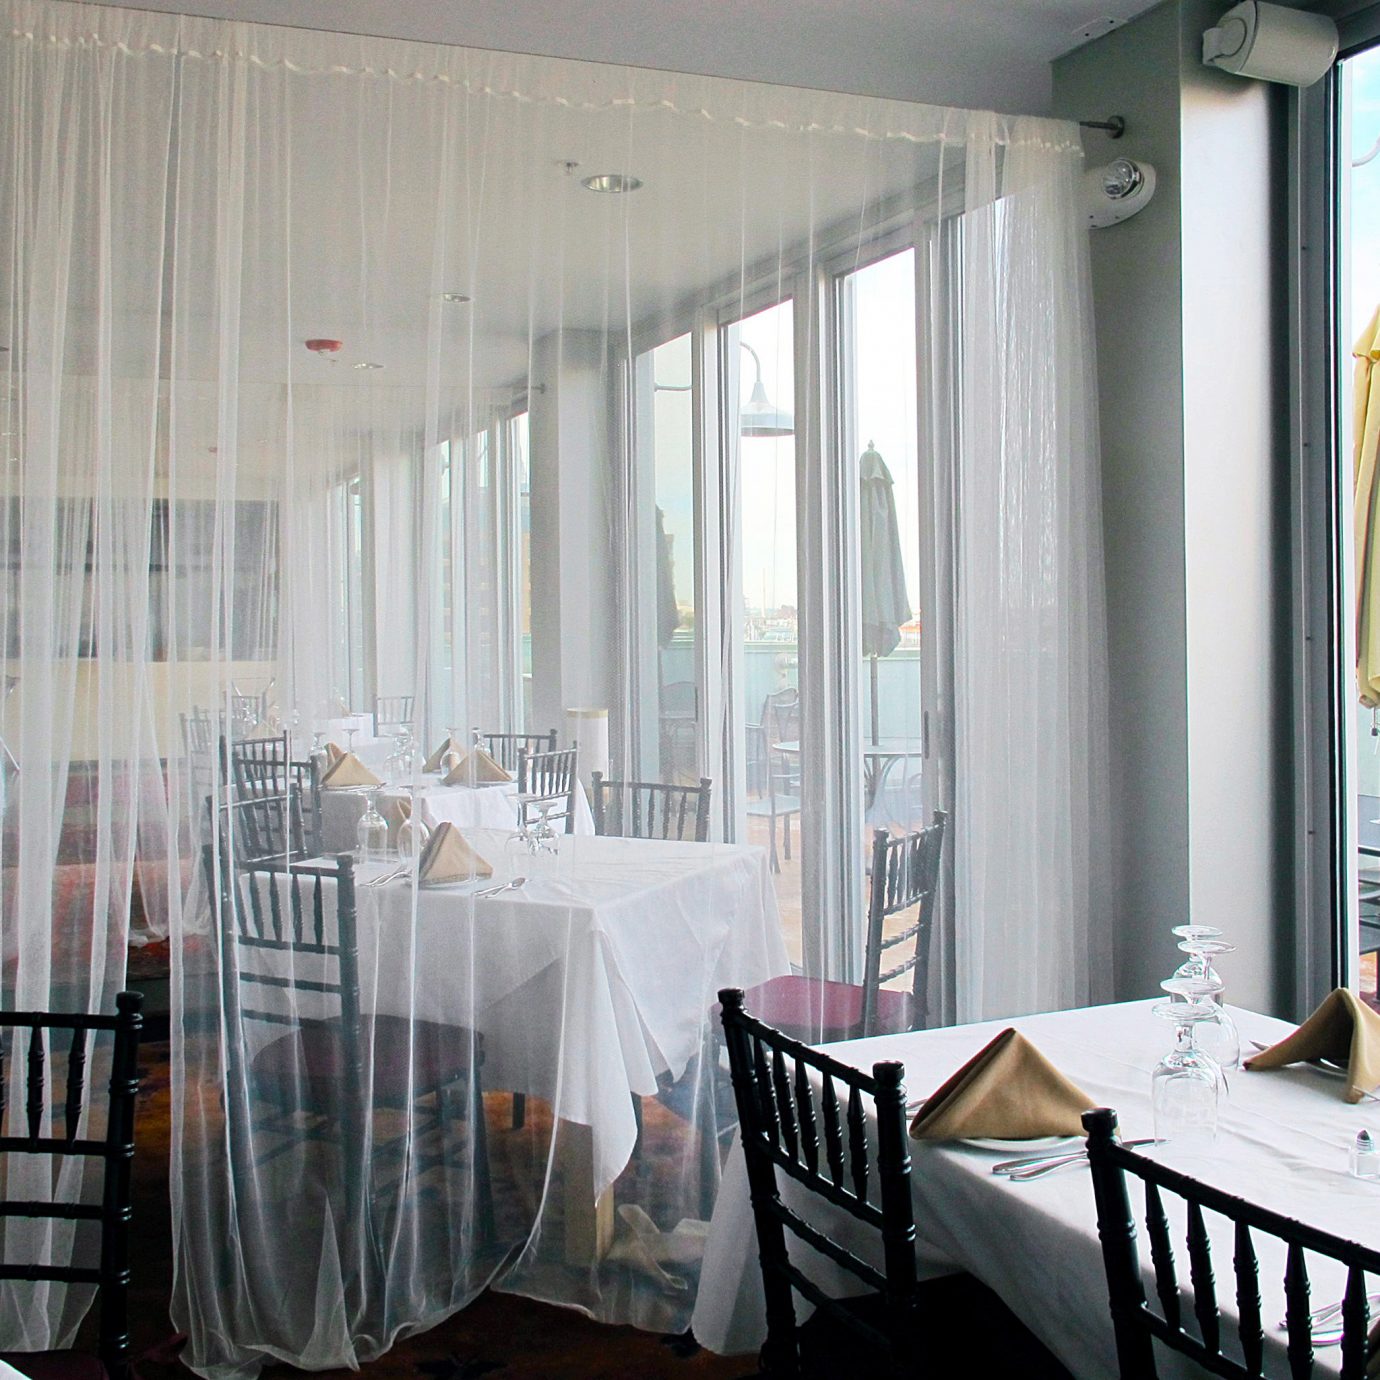 Balcony Dining Drink Eat Inn Patio Terrace property chair curtain home window treatment textile living room